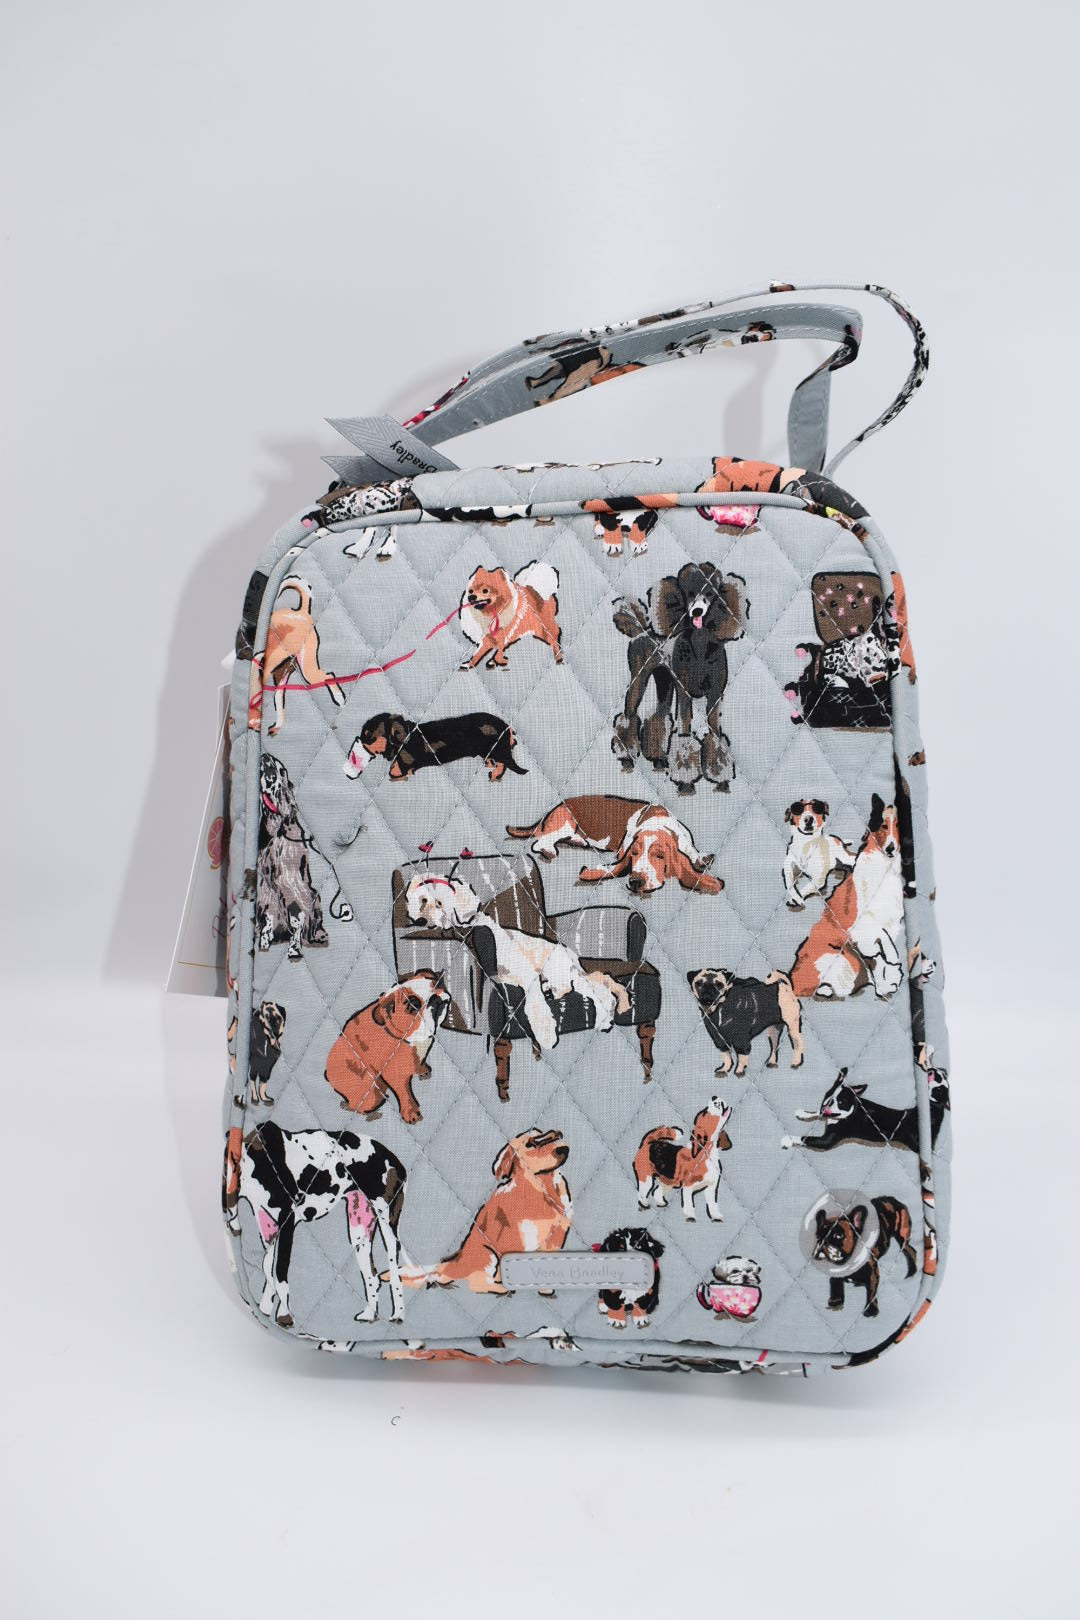 Vera Bradley Large Backpack & Lunch Bag in "Dog Show" Pattern